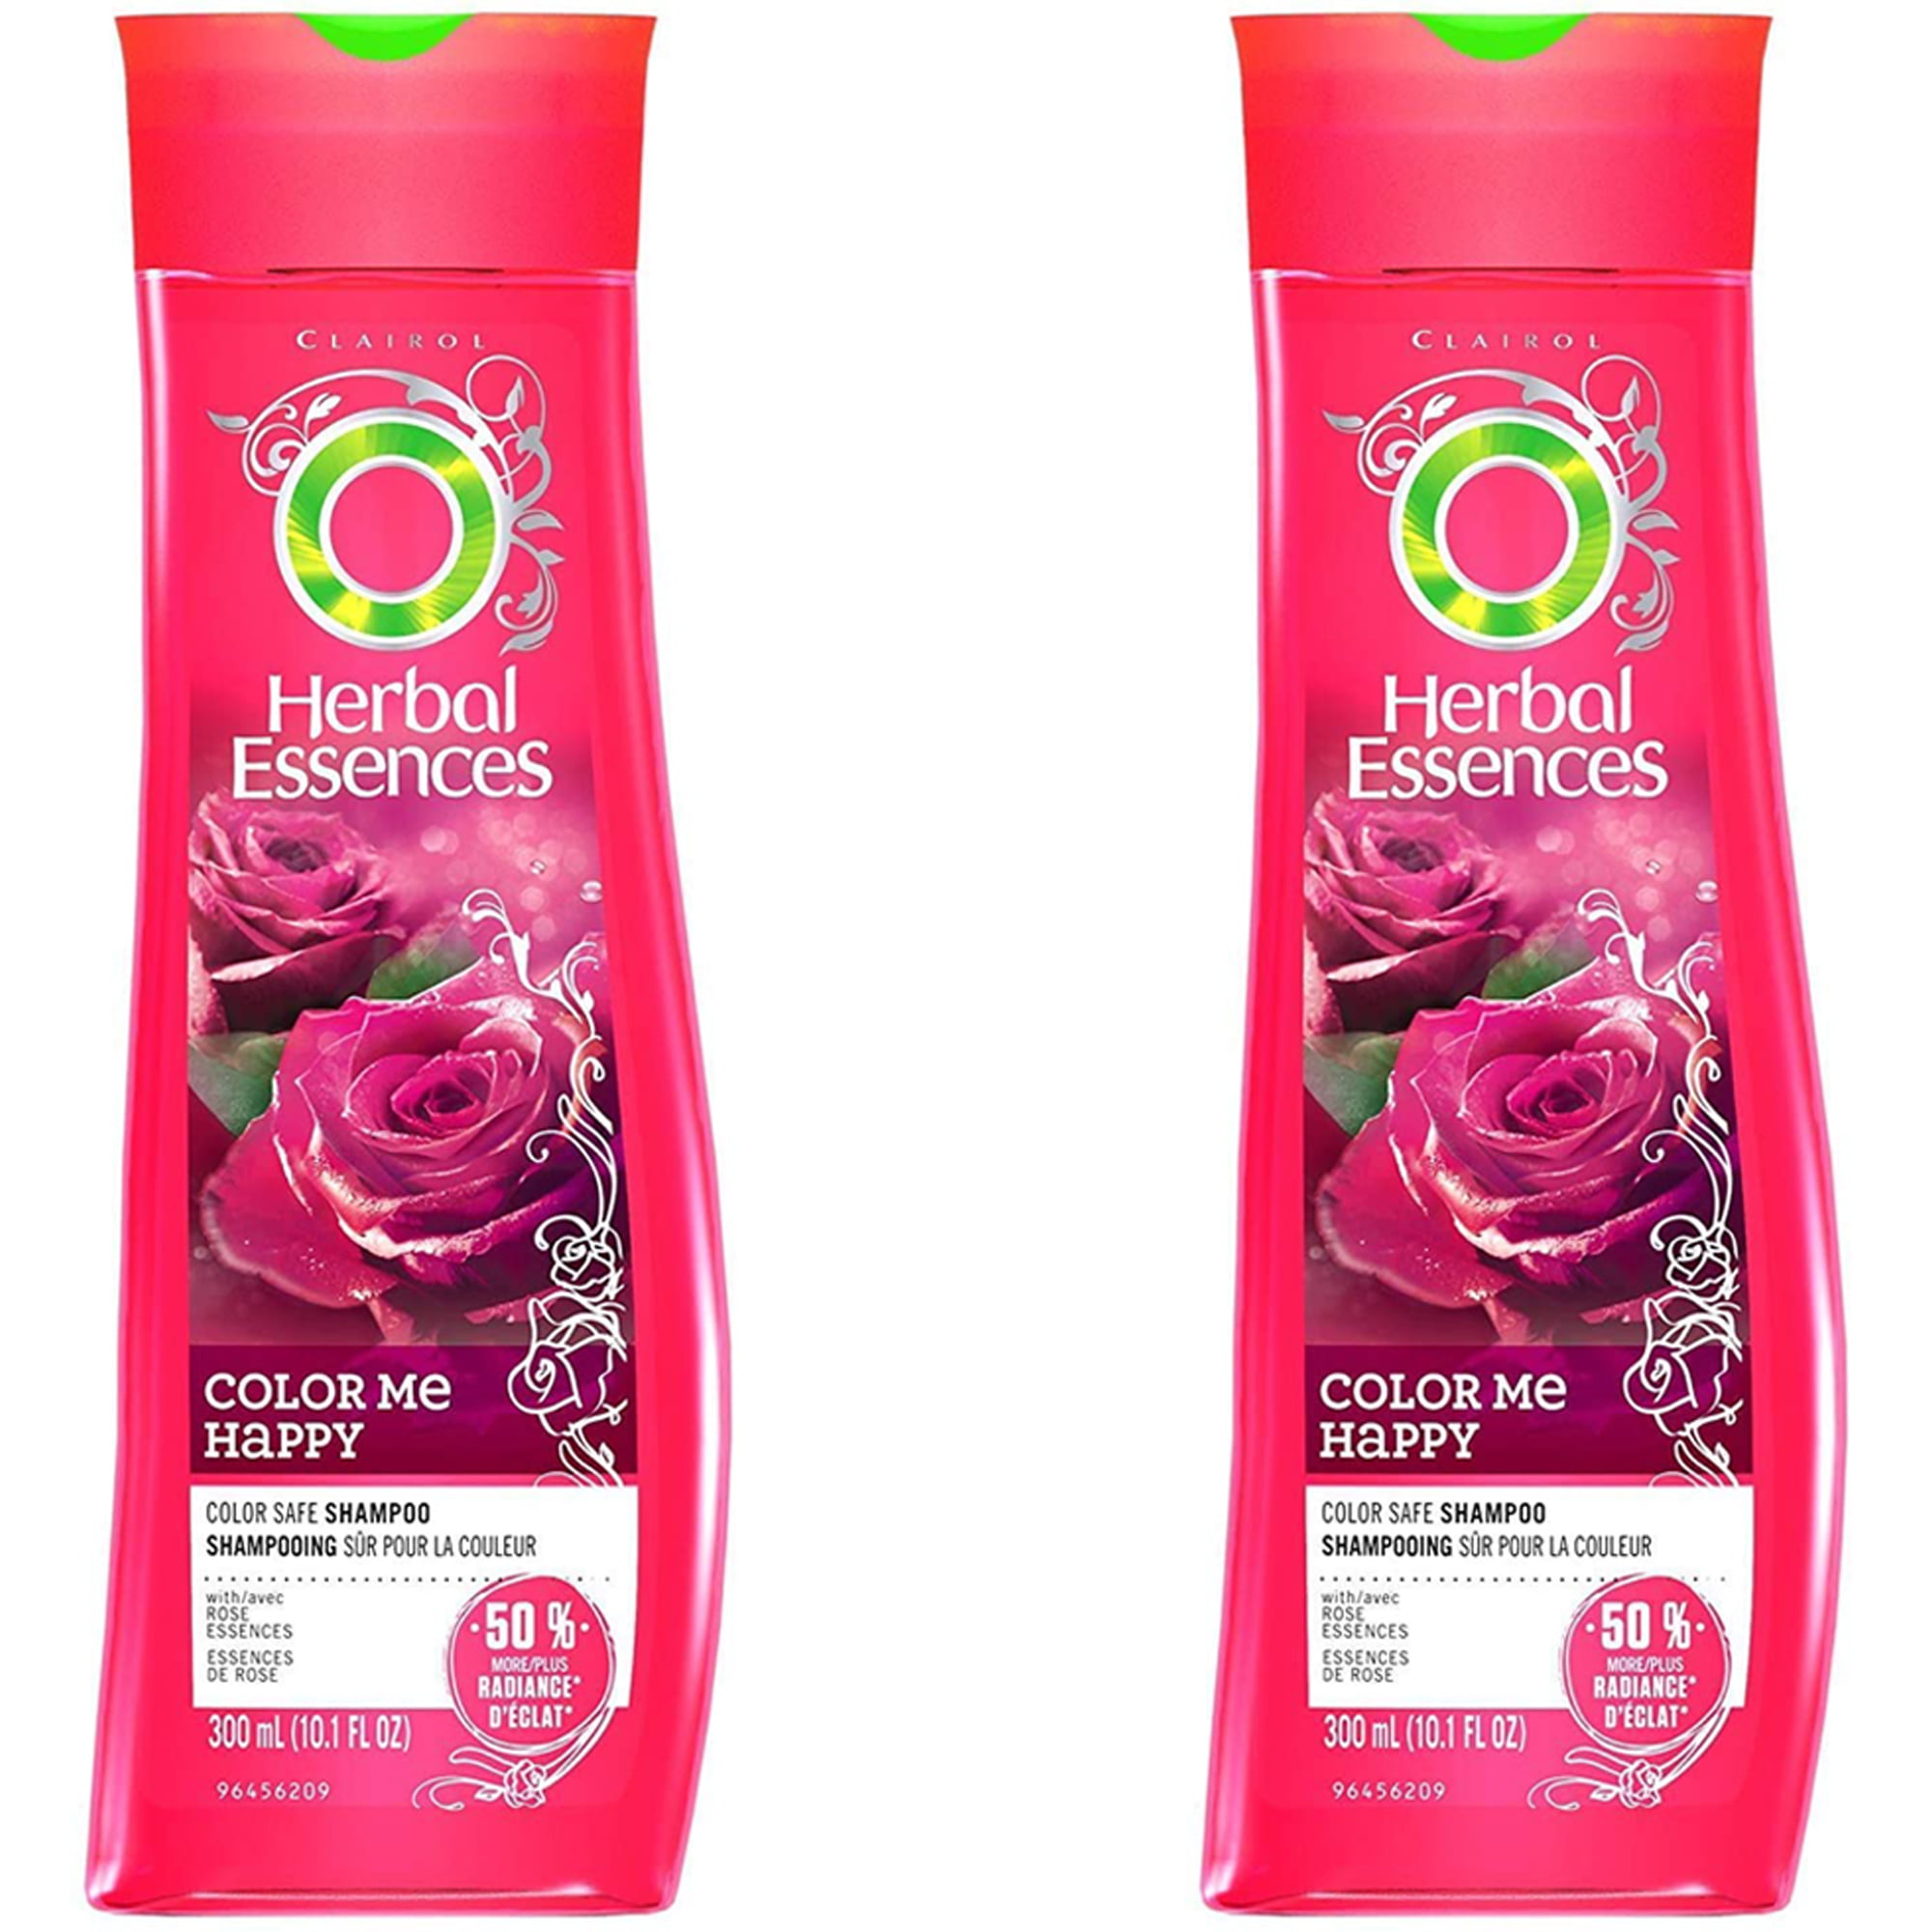 herbal essences color me happy color safe shampoo review